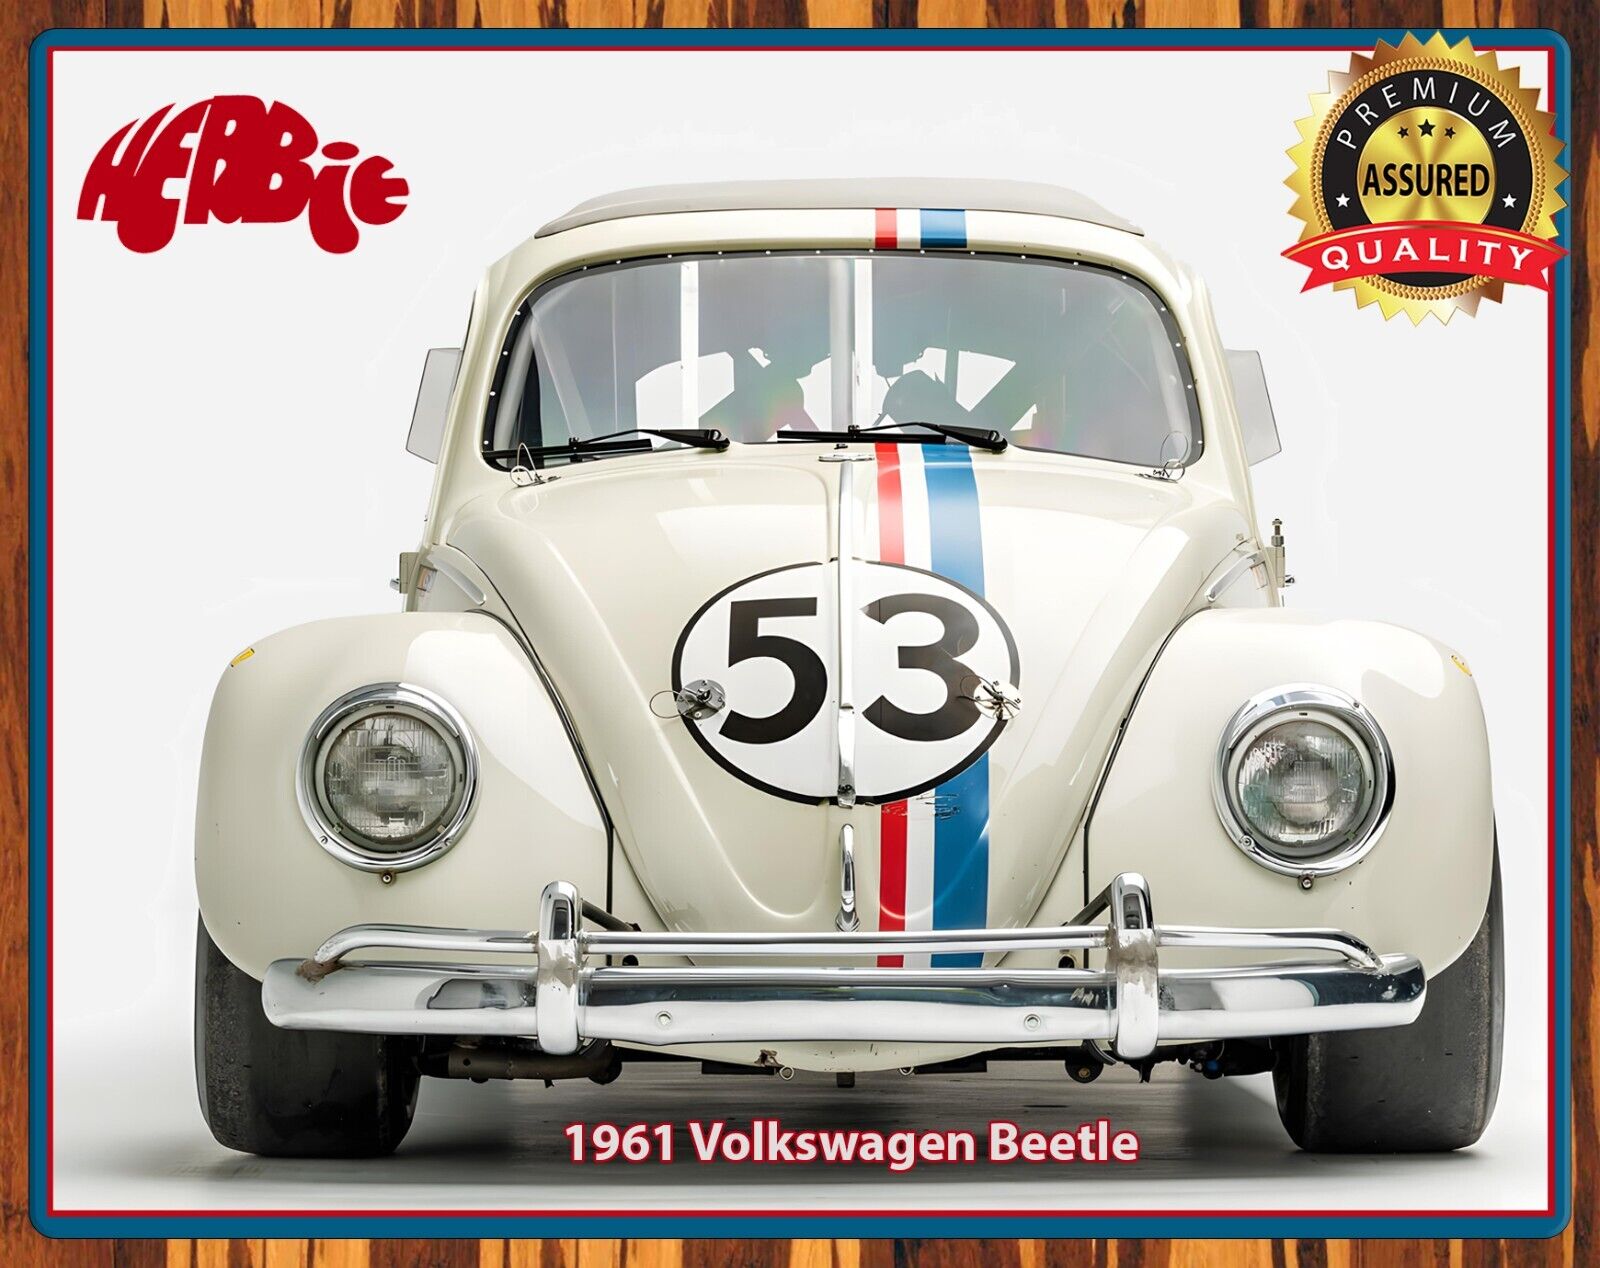 1961 Volkswagen Beetle - Herbie The Love Bug - Metal Sign 11 x 14